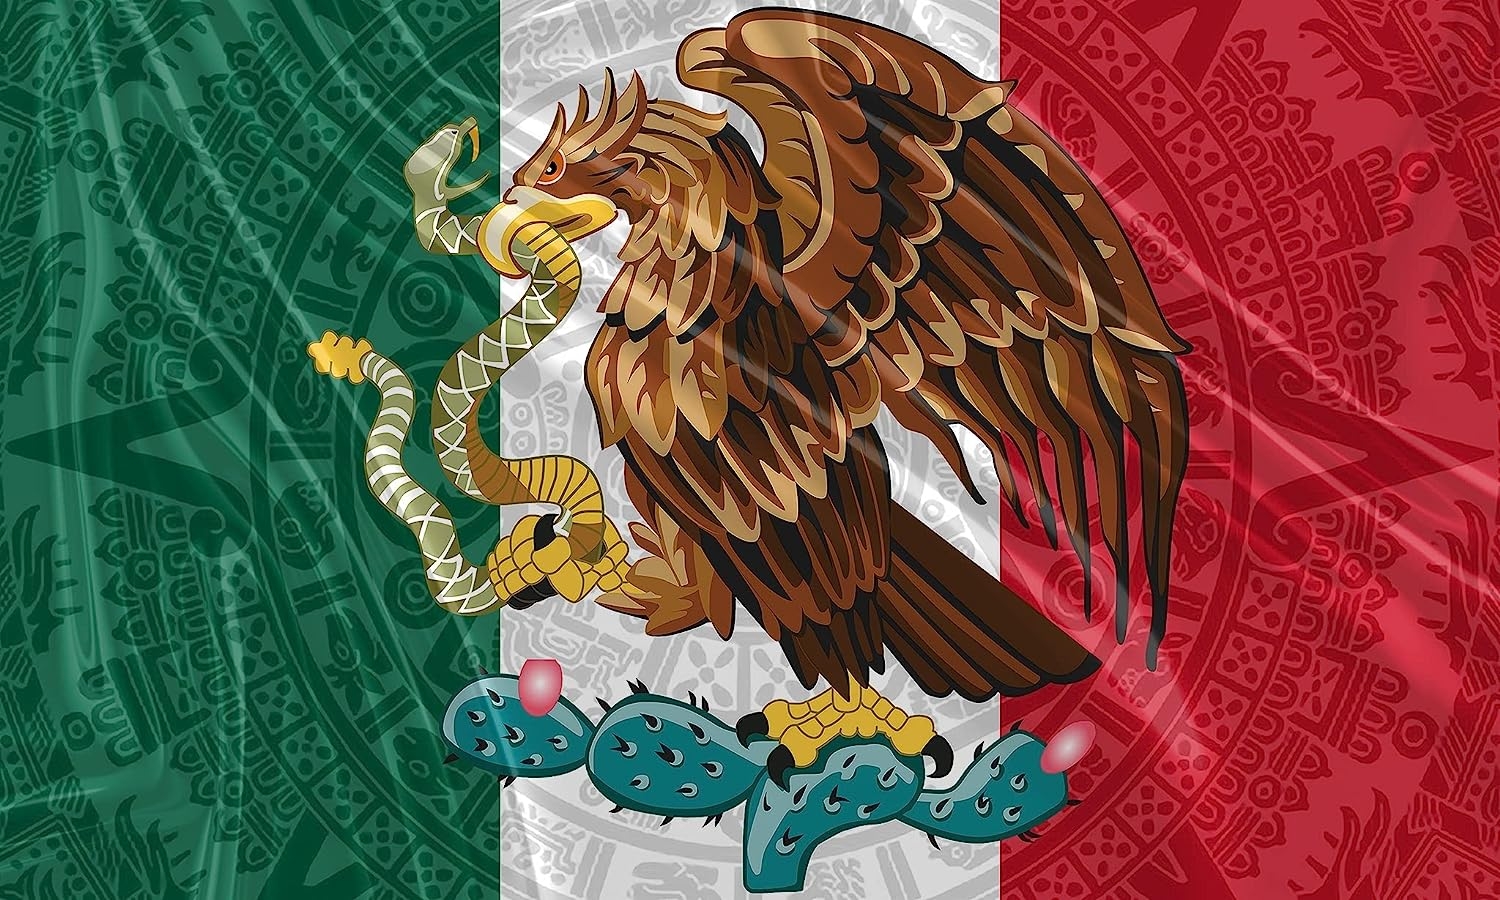 Aguila Grande Bandera mexicana 3×5 pies   price checker   price checker Description Gallery Reviews Variations Additional